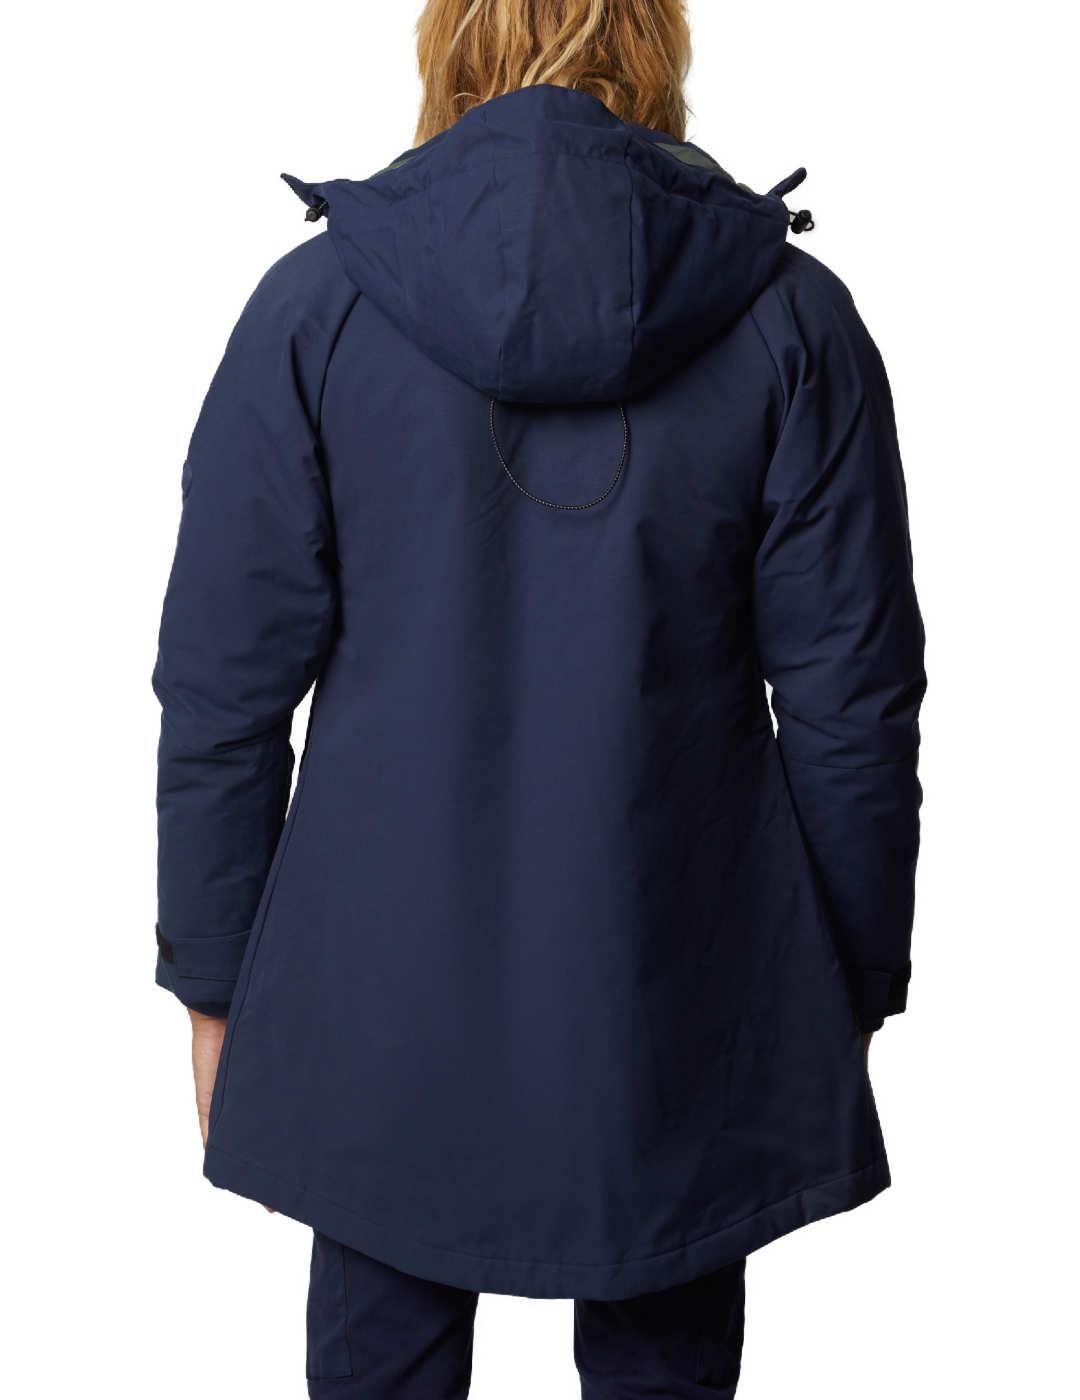 Parka Altonadock larga con capucha azul marino de hombre